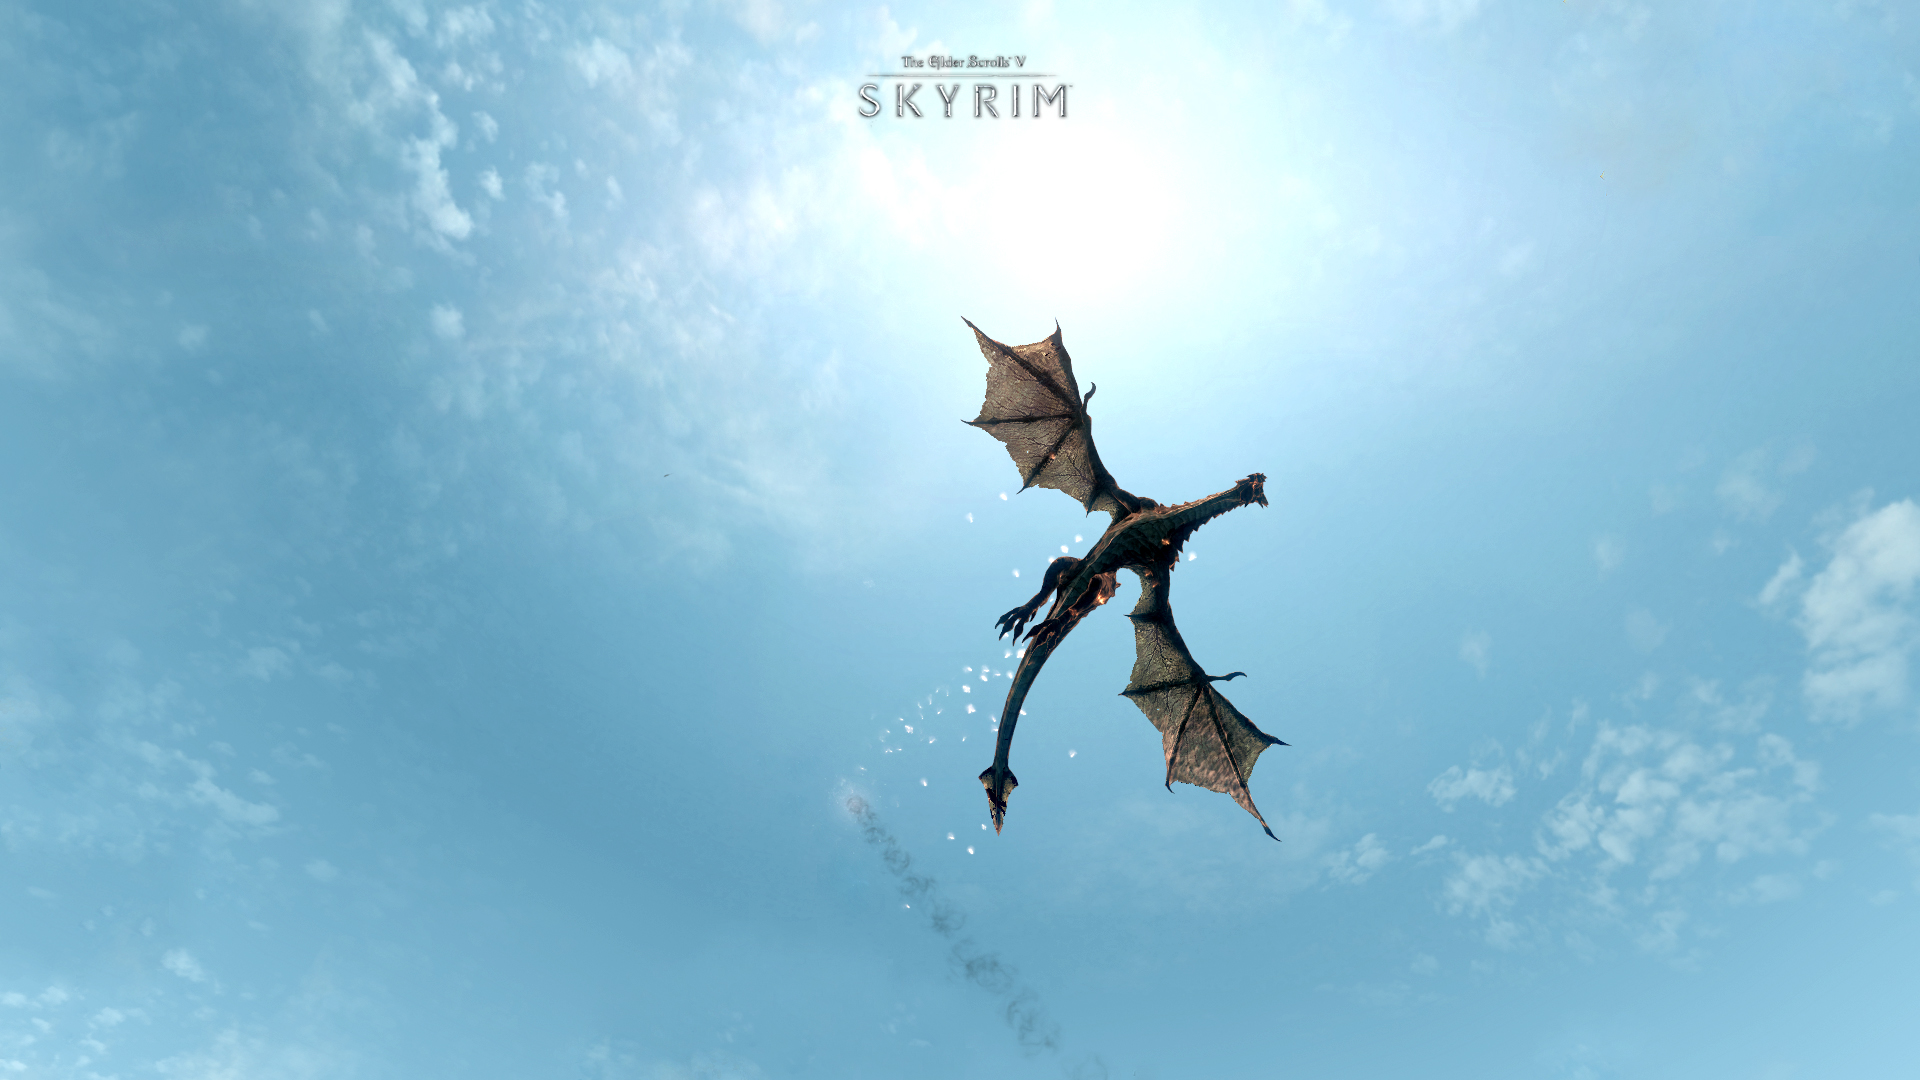 the elder scrolls v: skyrim, video game, dragon, sky, skyrim, the elder scrolls